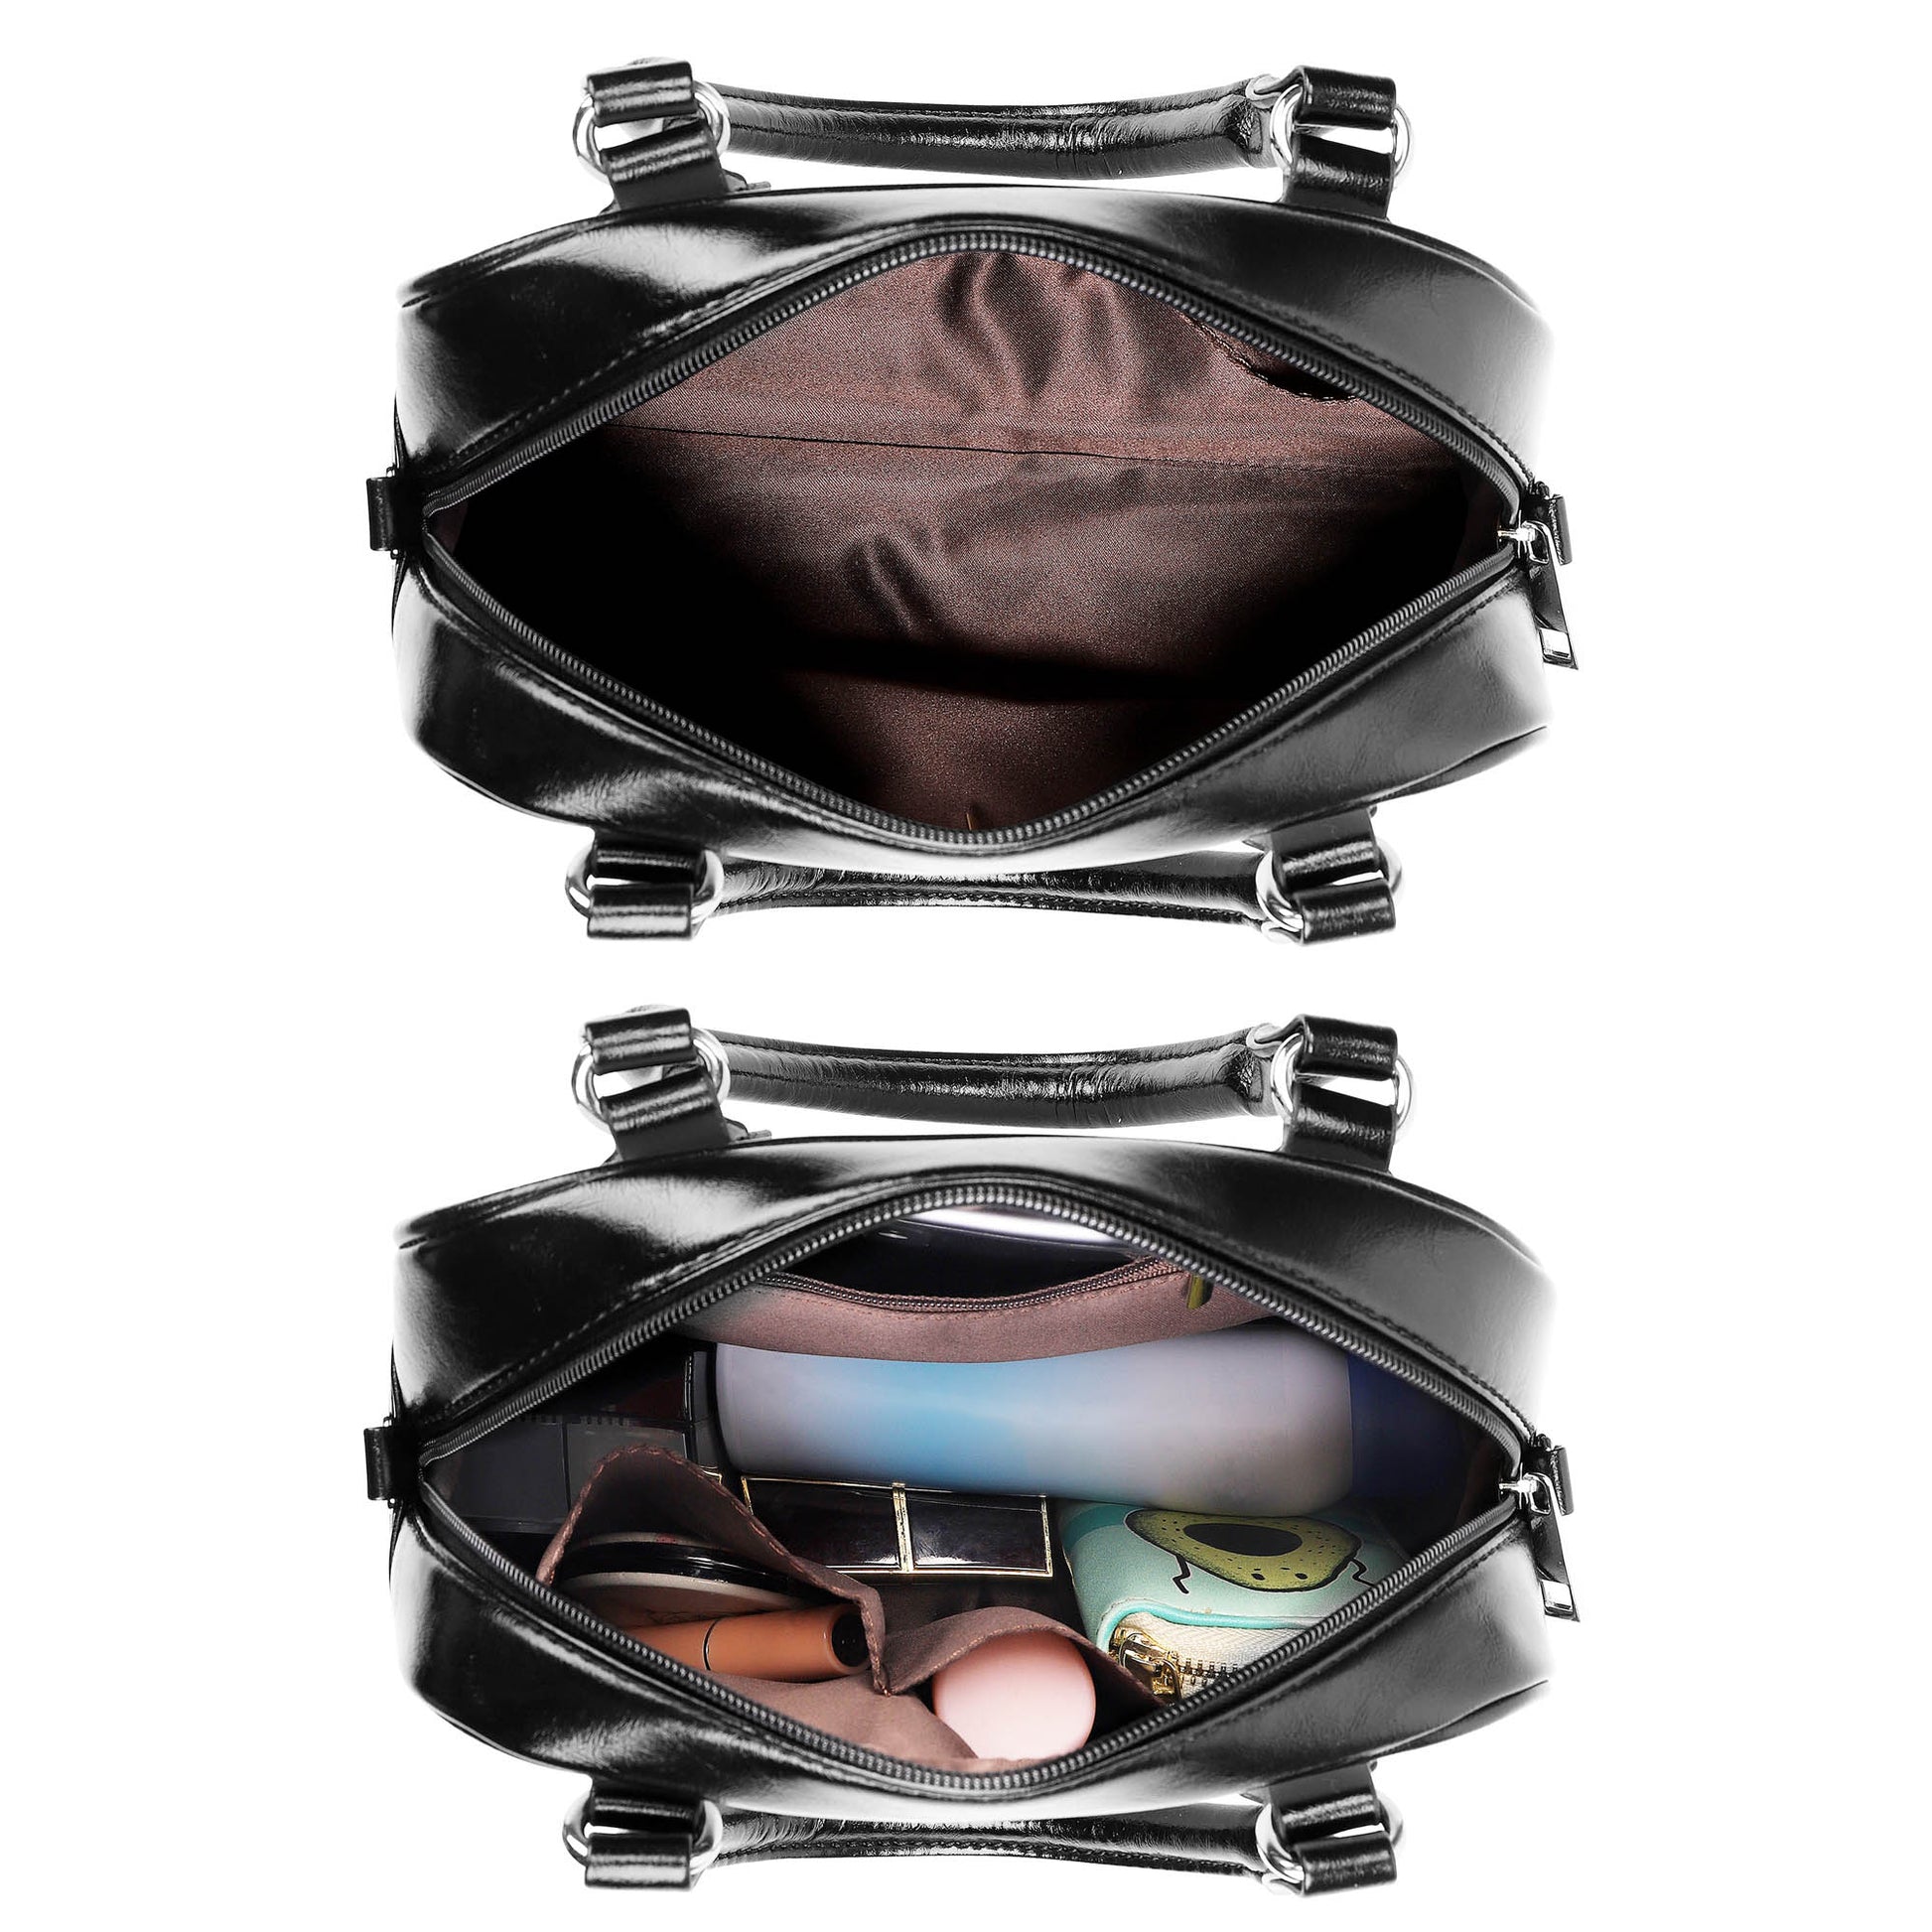 Graham Tartan Shoulder Handbags with Family Crest - Tartanvibesclothing